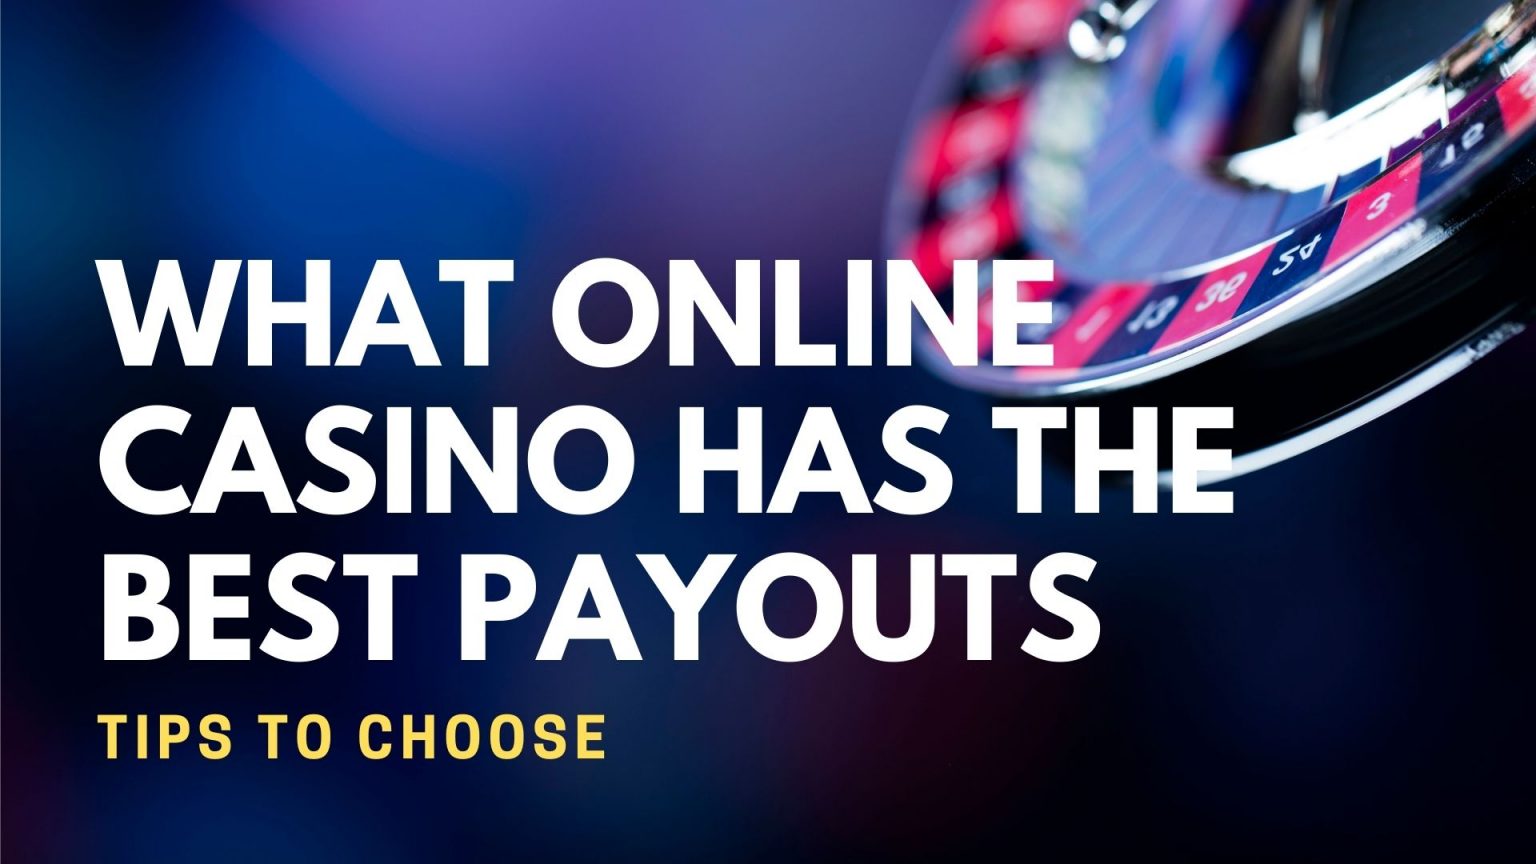 casino 888 online